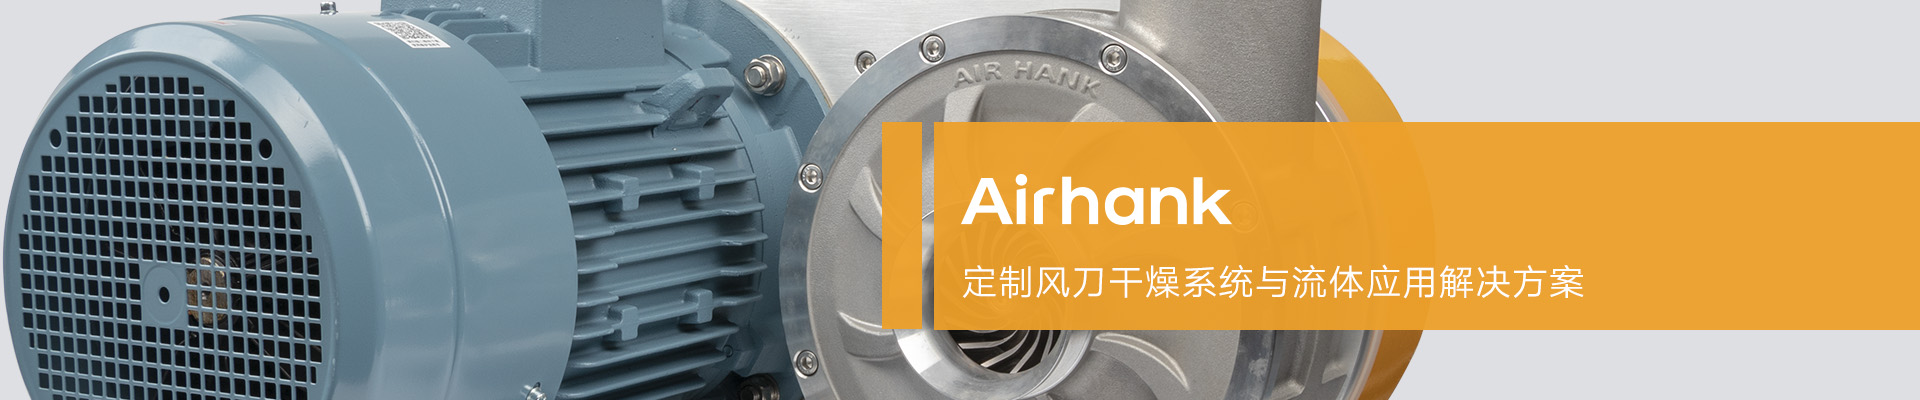 Airhank高压风机在食品清洗应用案例